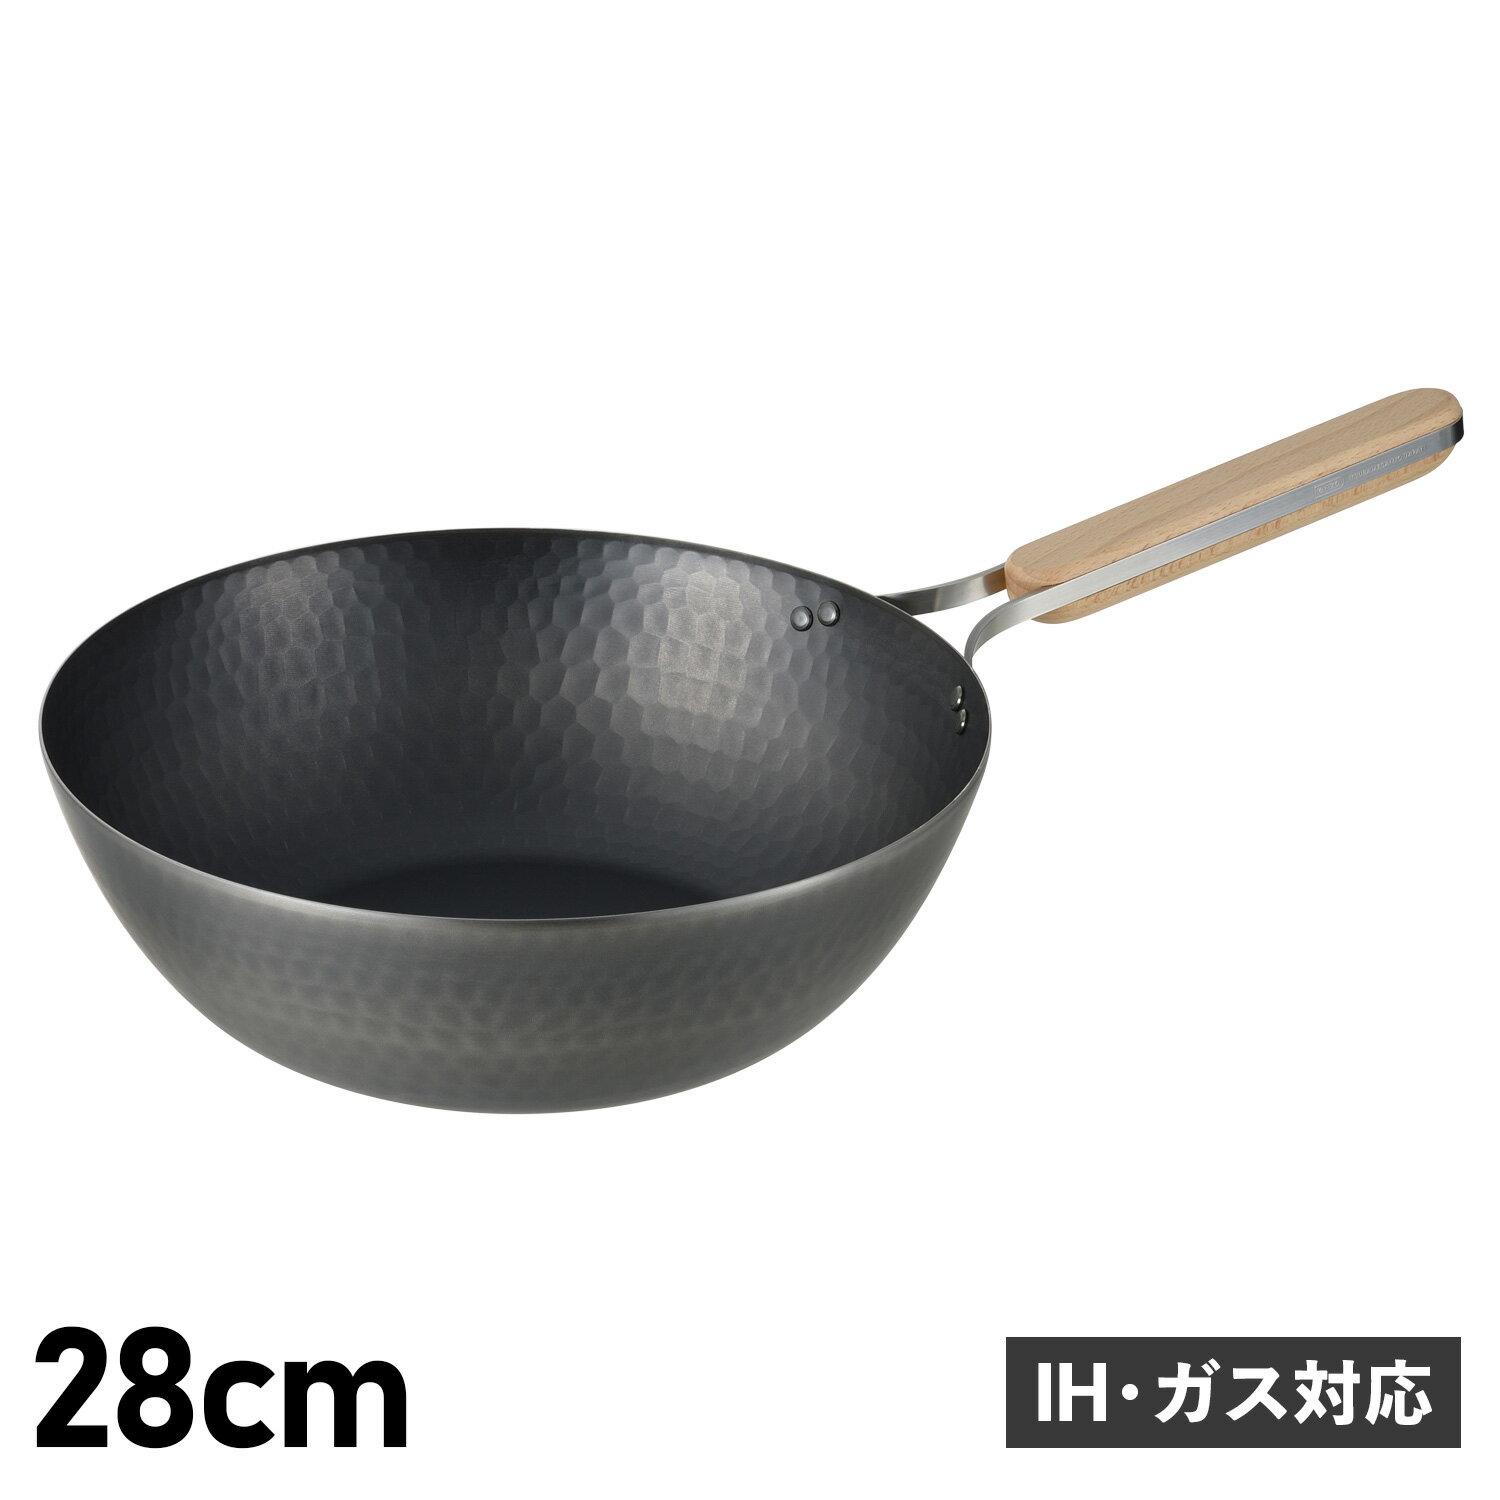 enzo IRON WOK エンゾウ 中華鍋 フライパン 28cm IH ガス対応 鉄 en-013 アウトドア